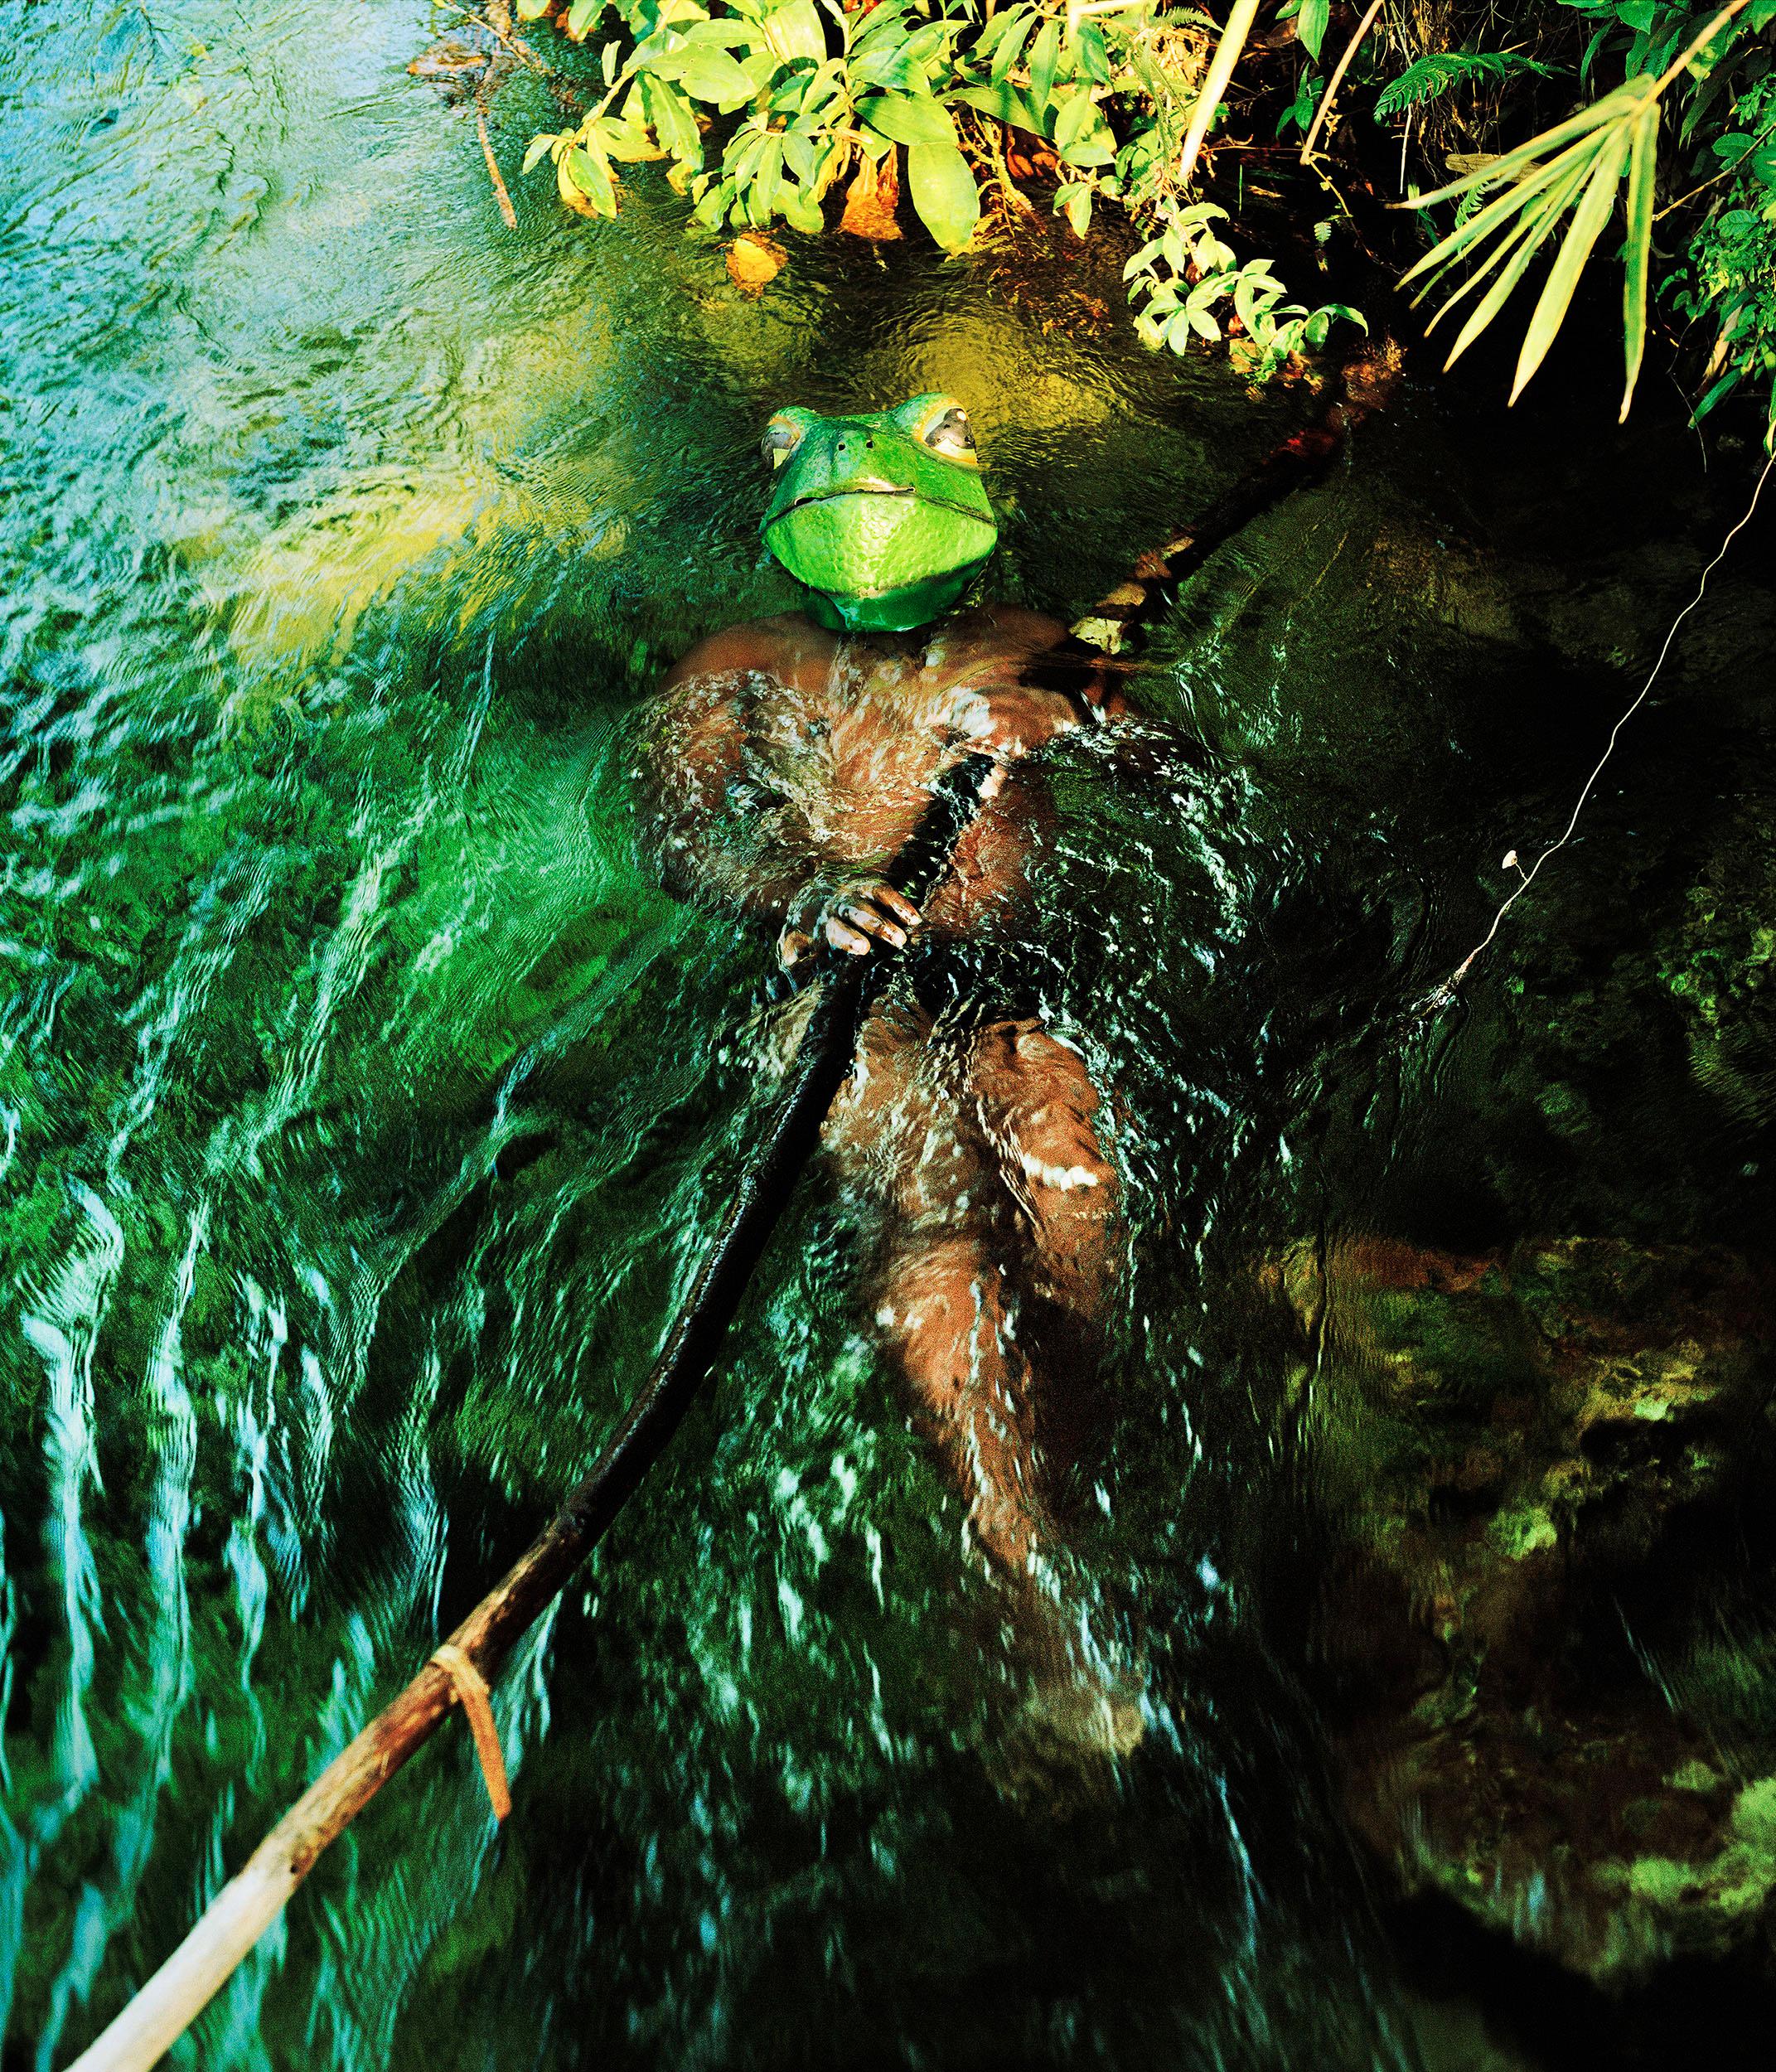 Verena Prenner Landscape Photograph - Congo Frog - 21st Century Landscape Portrait Animal Photography Edition